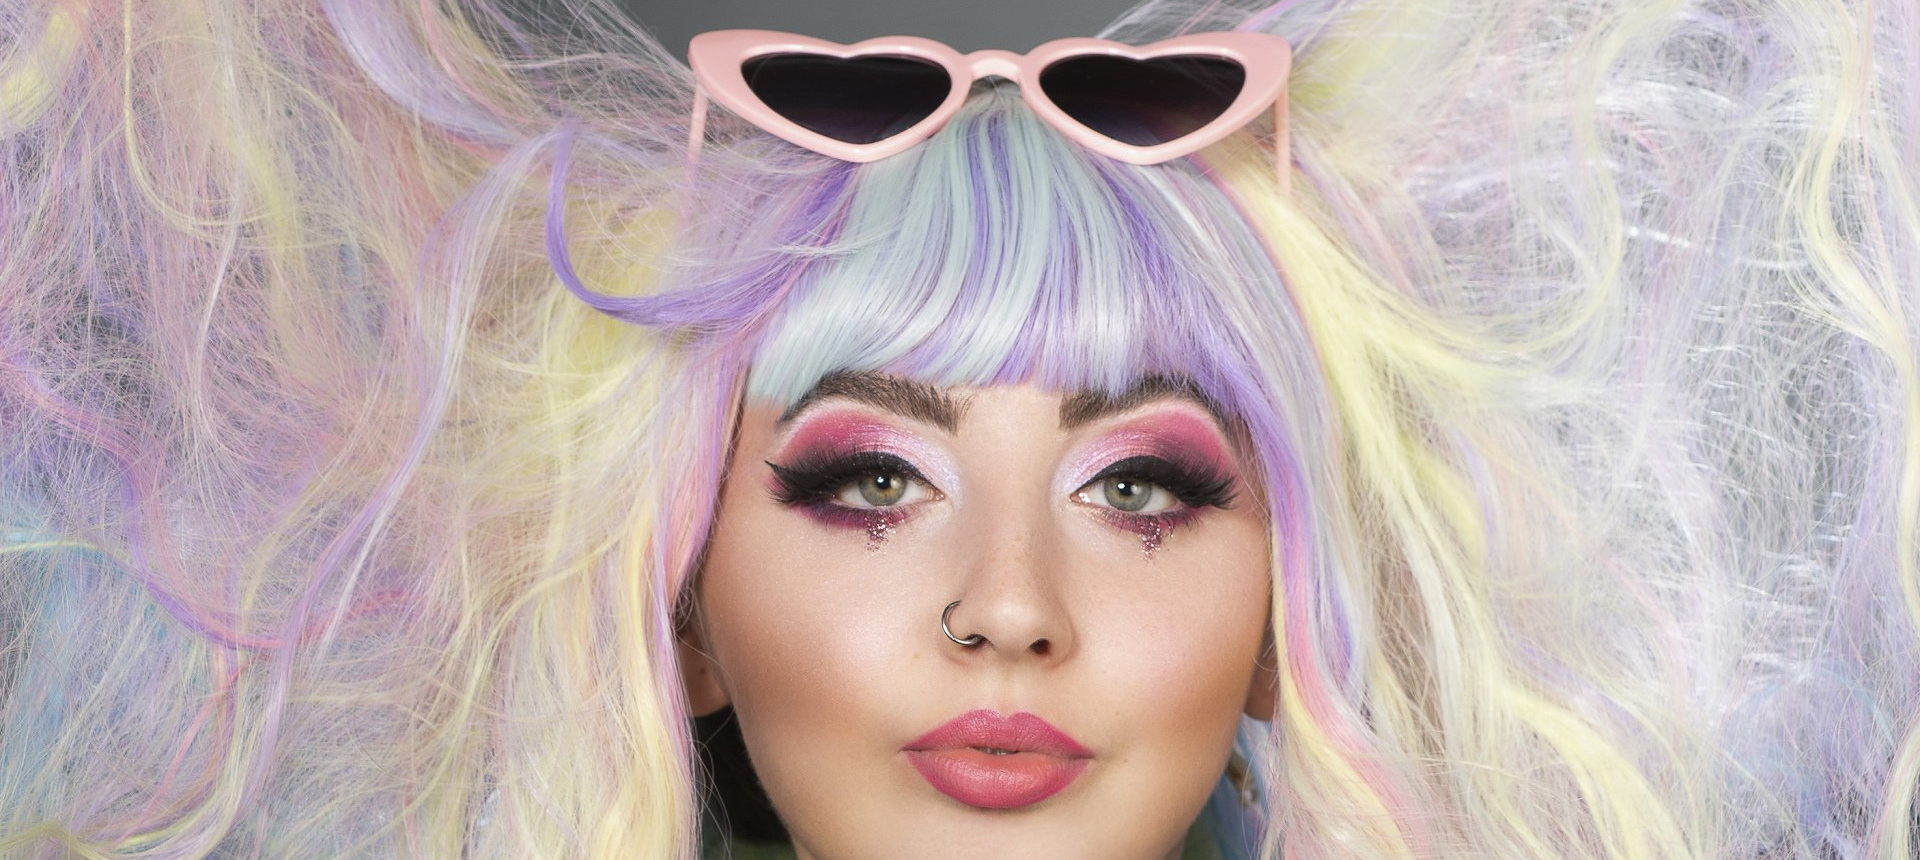 Alternative model with rainbow hair and heart sunglasses